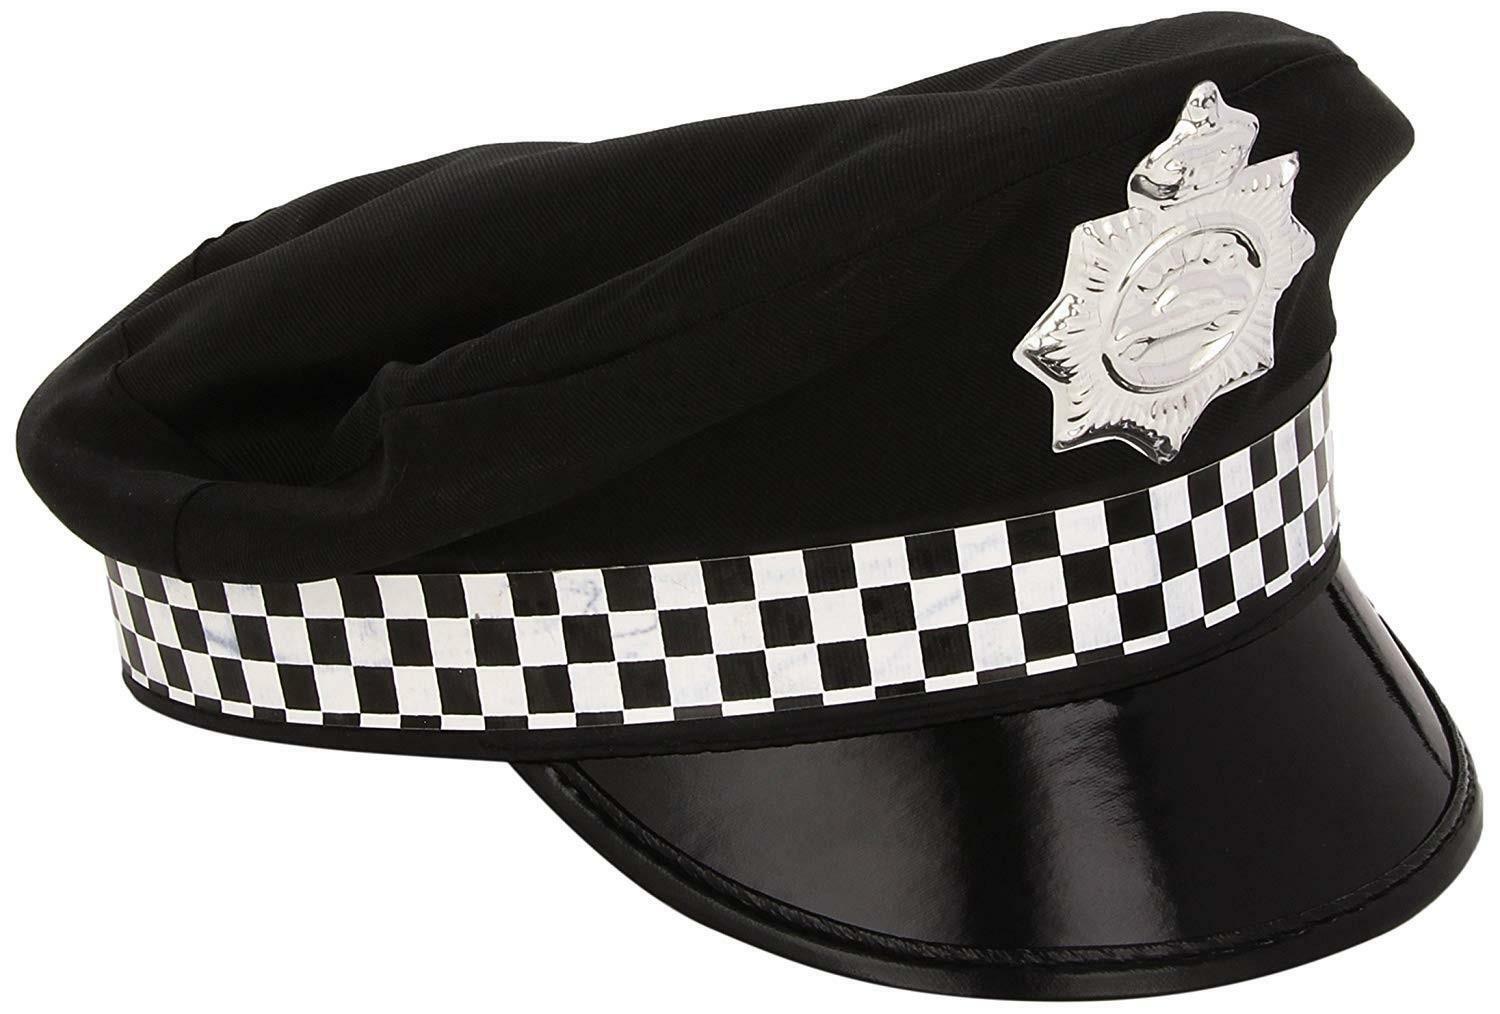 widmann cappello poliziotto inglese